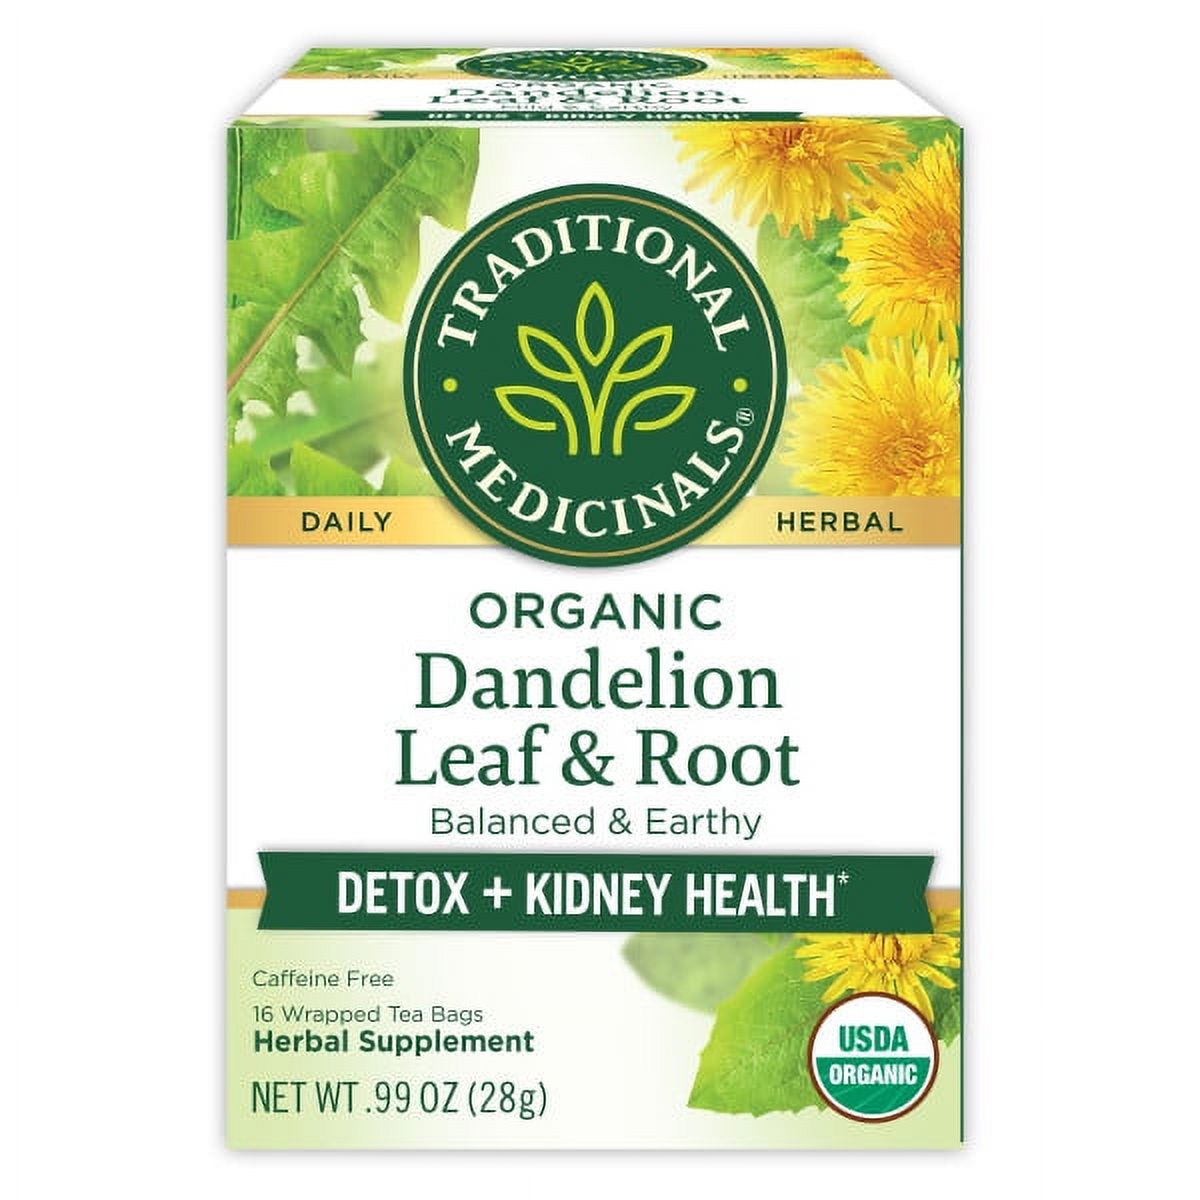 Traditional Medicinal Dandelion Leaf & Root, Organic Tea Bags, 16 Count - image 1 of 6